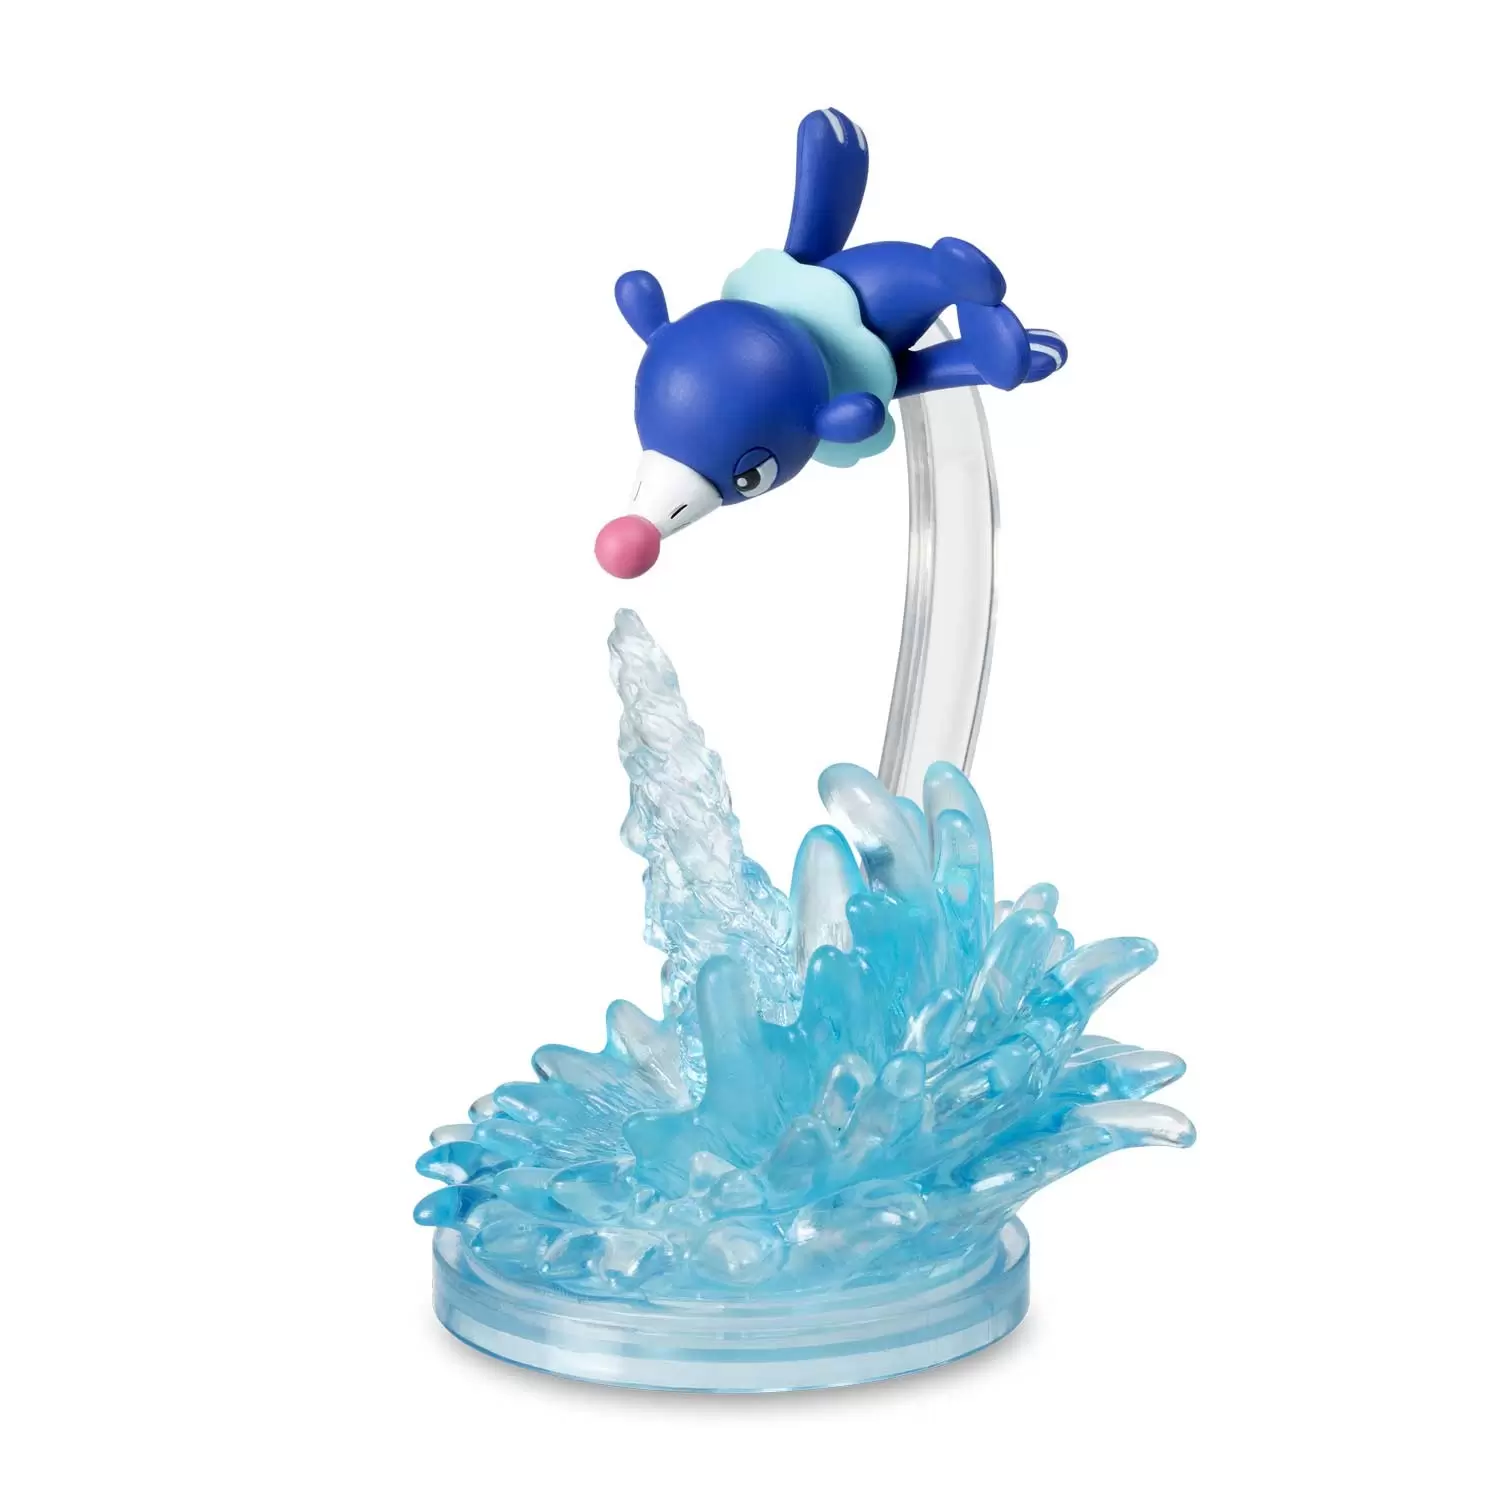 Pokémon Gallery Figures - Popplio: Water Gun